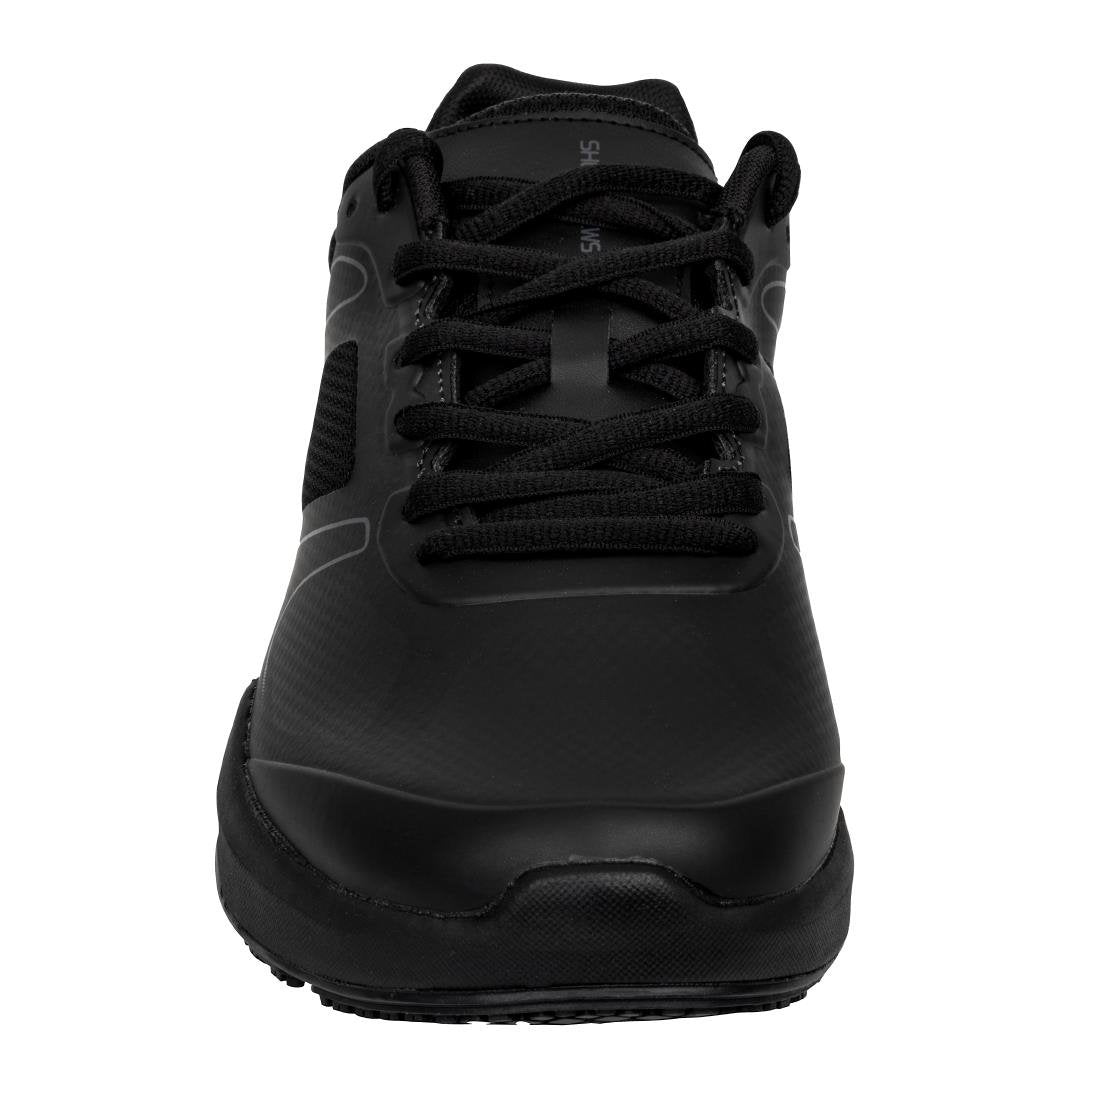 BB586-45 Shoes for Crews Men's Evolution Trainers Black Size 45